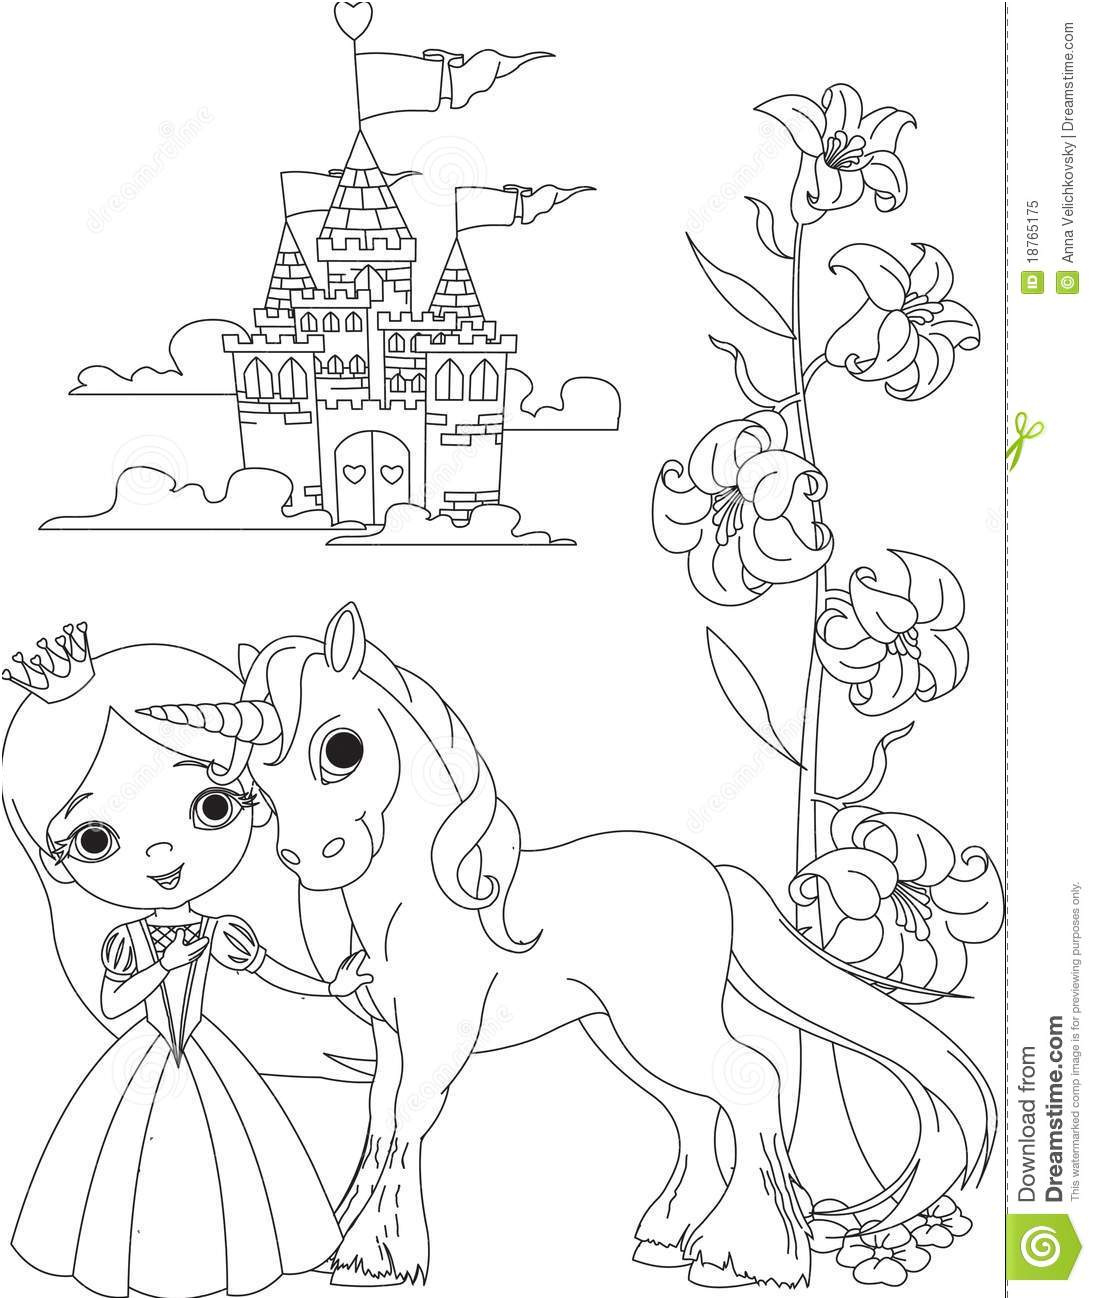 royalty free stock photo beautiful princess unicorn coloring page image